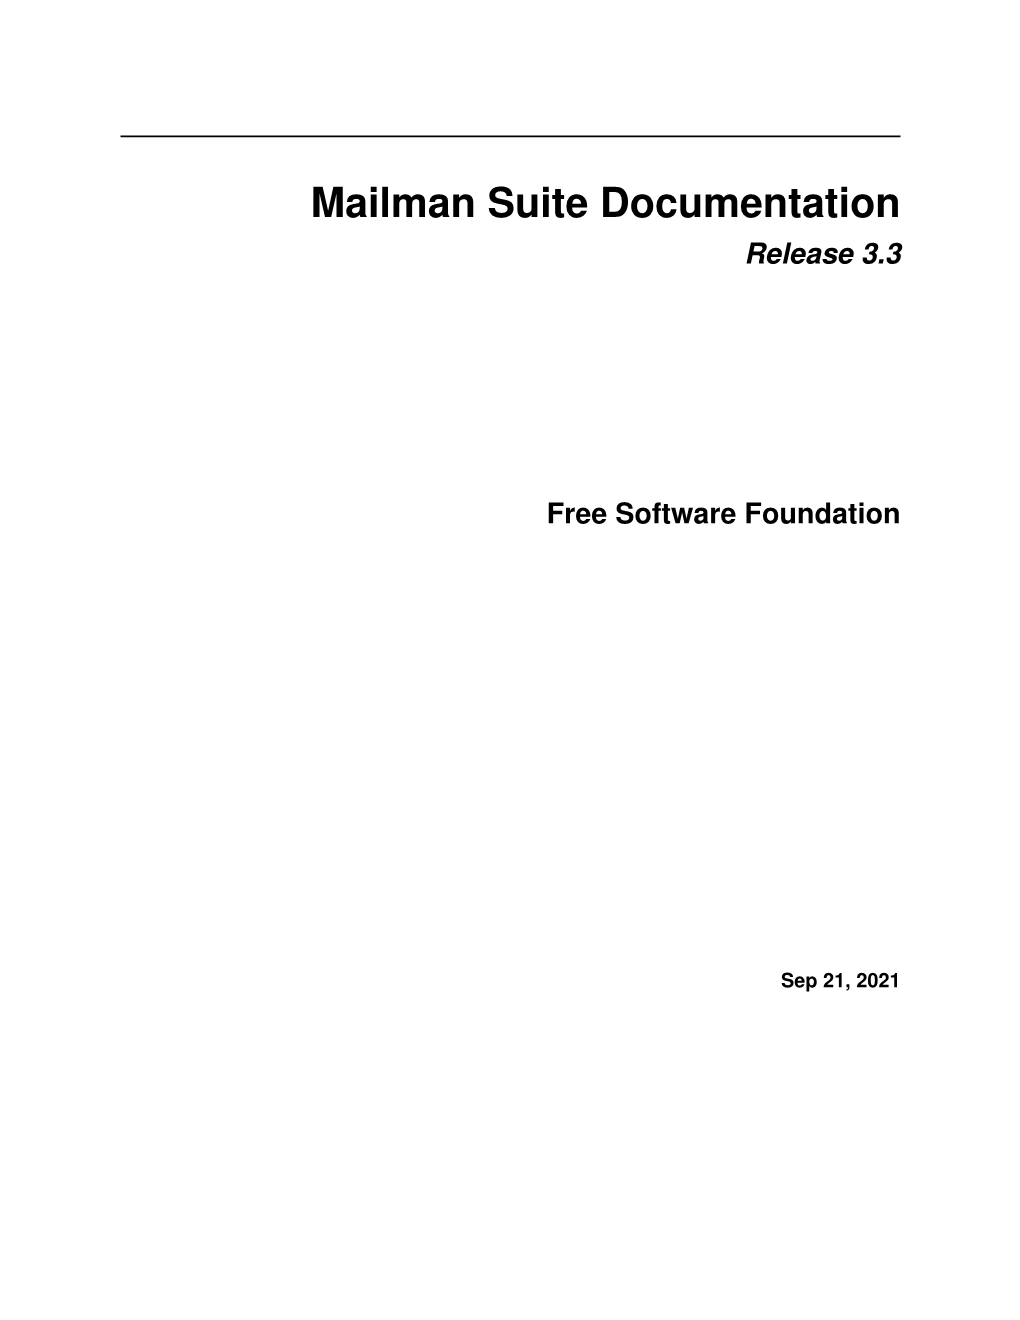 Mailman Suite Documentation Release 3.3